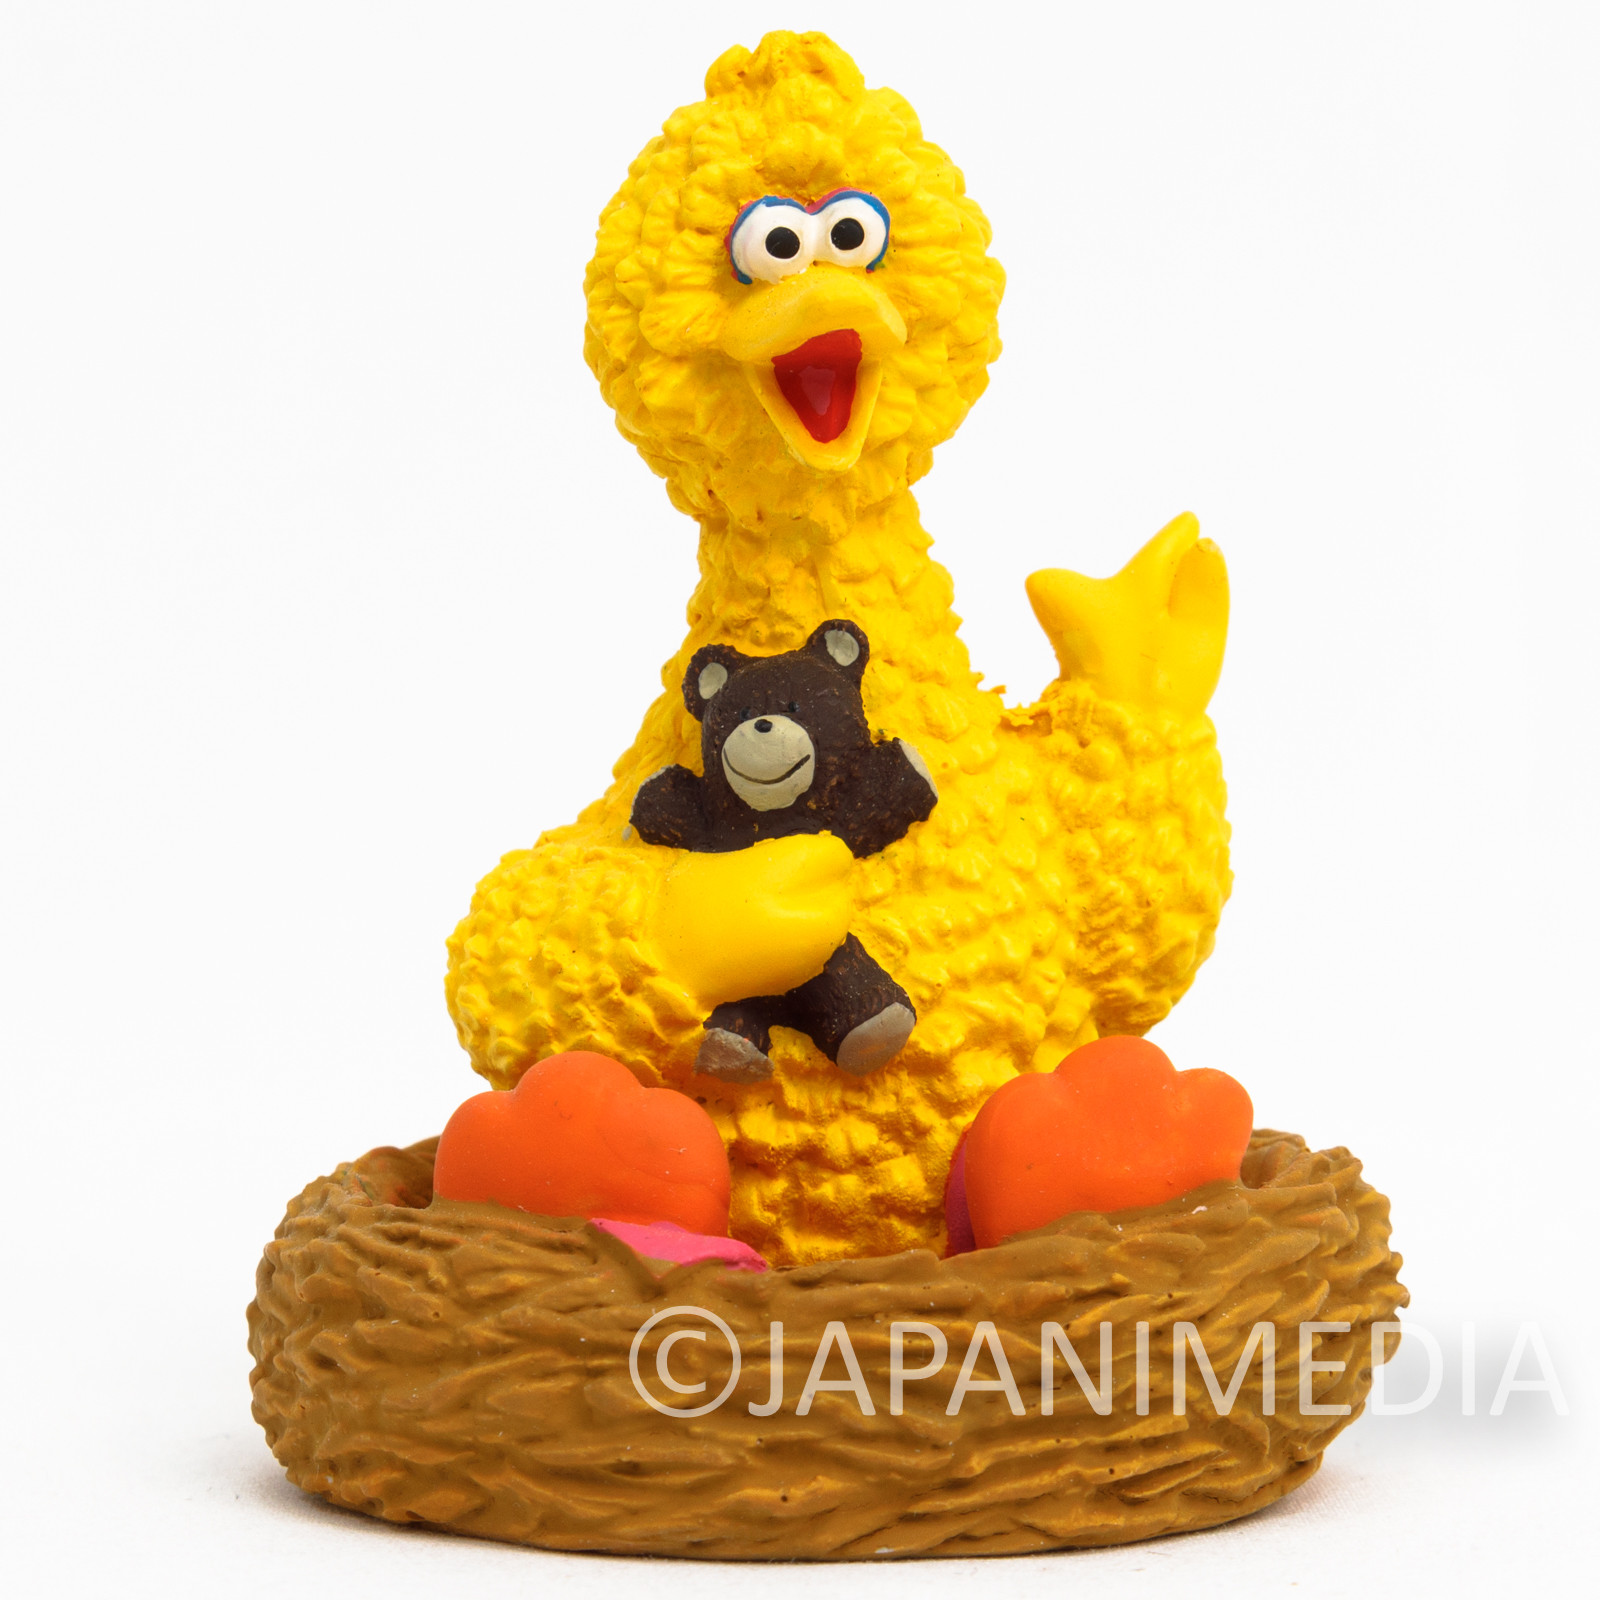 Sesame Street Big Bird Polystone Figure SEGA